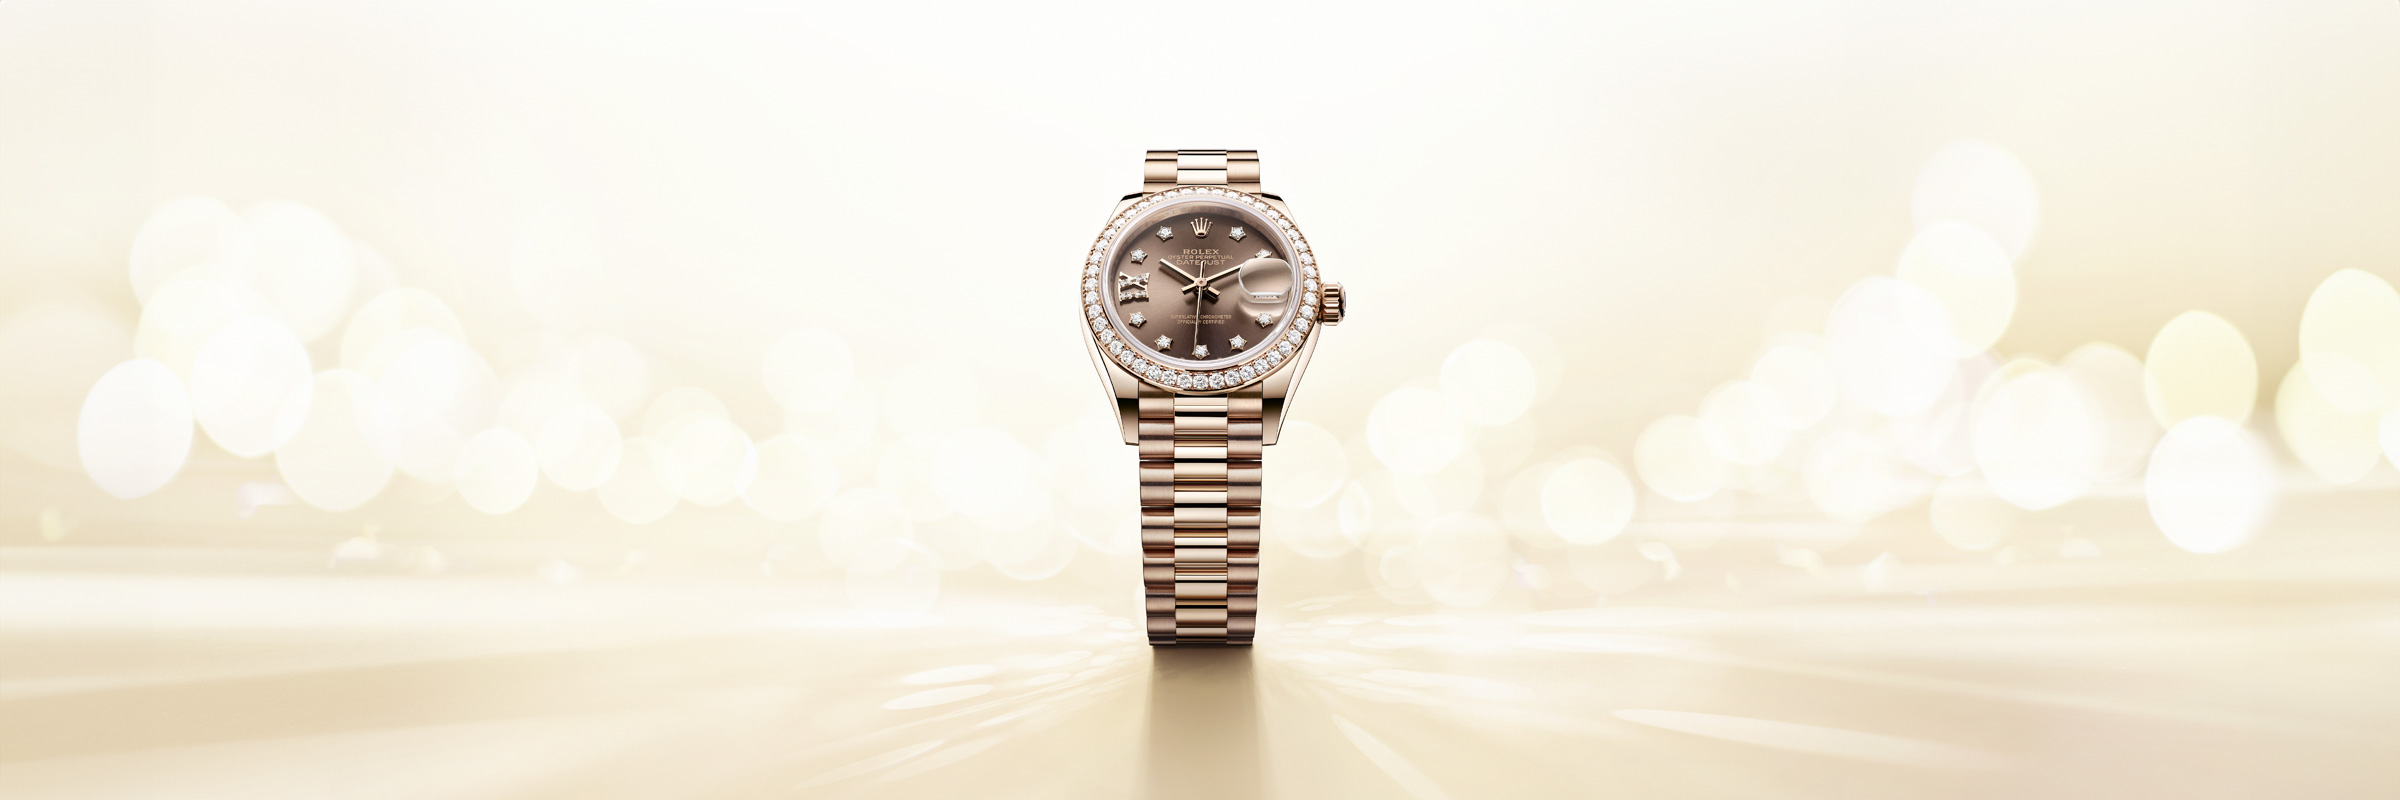 Rolex Lady-Datejust watches